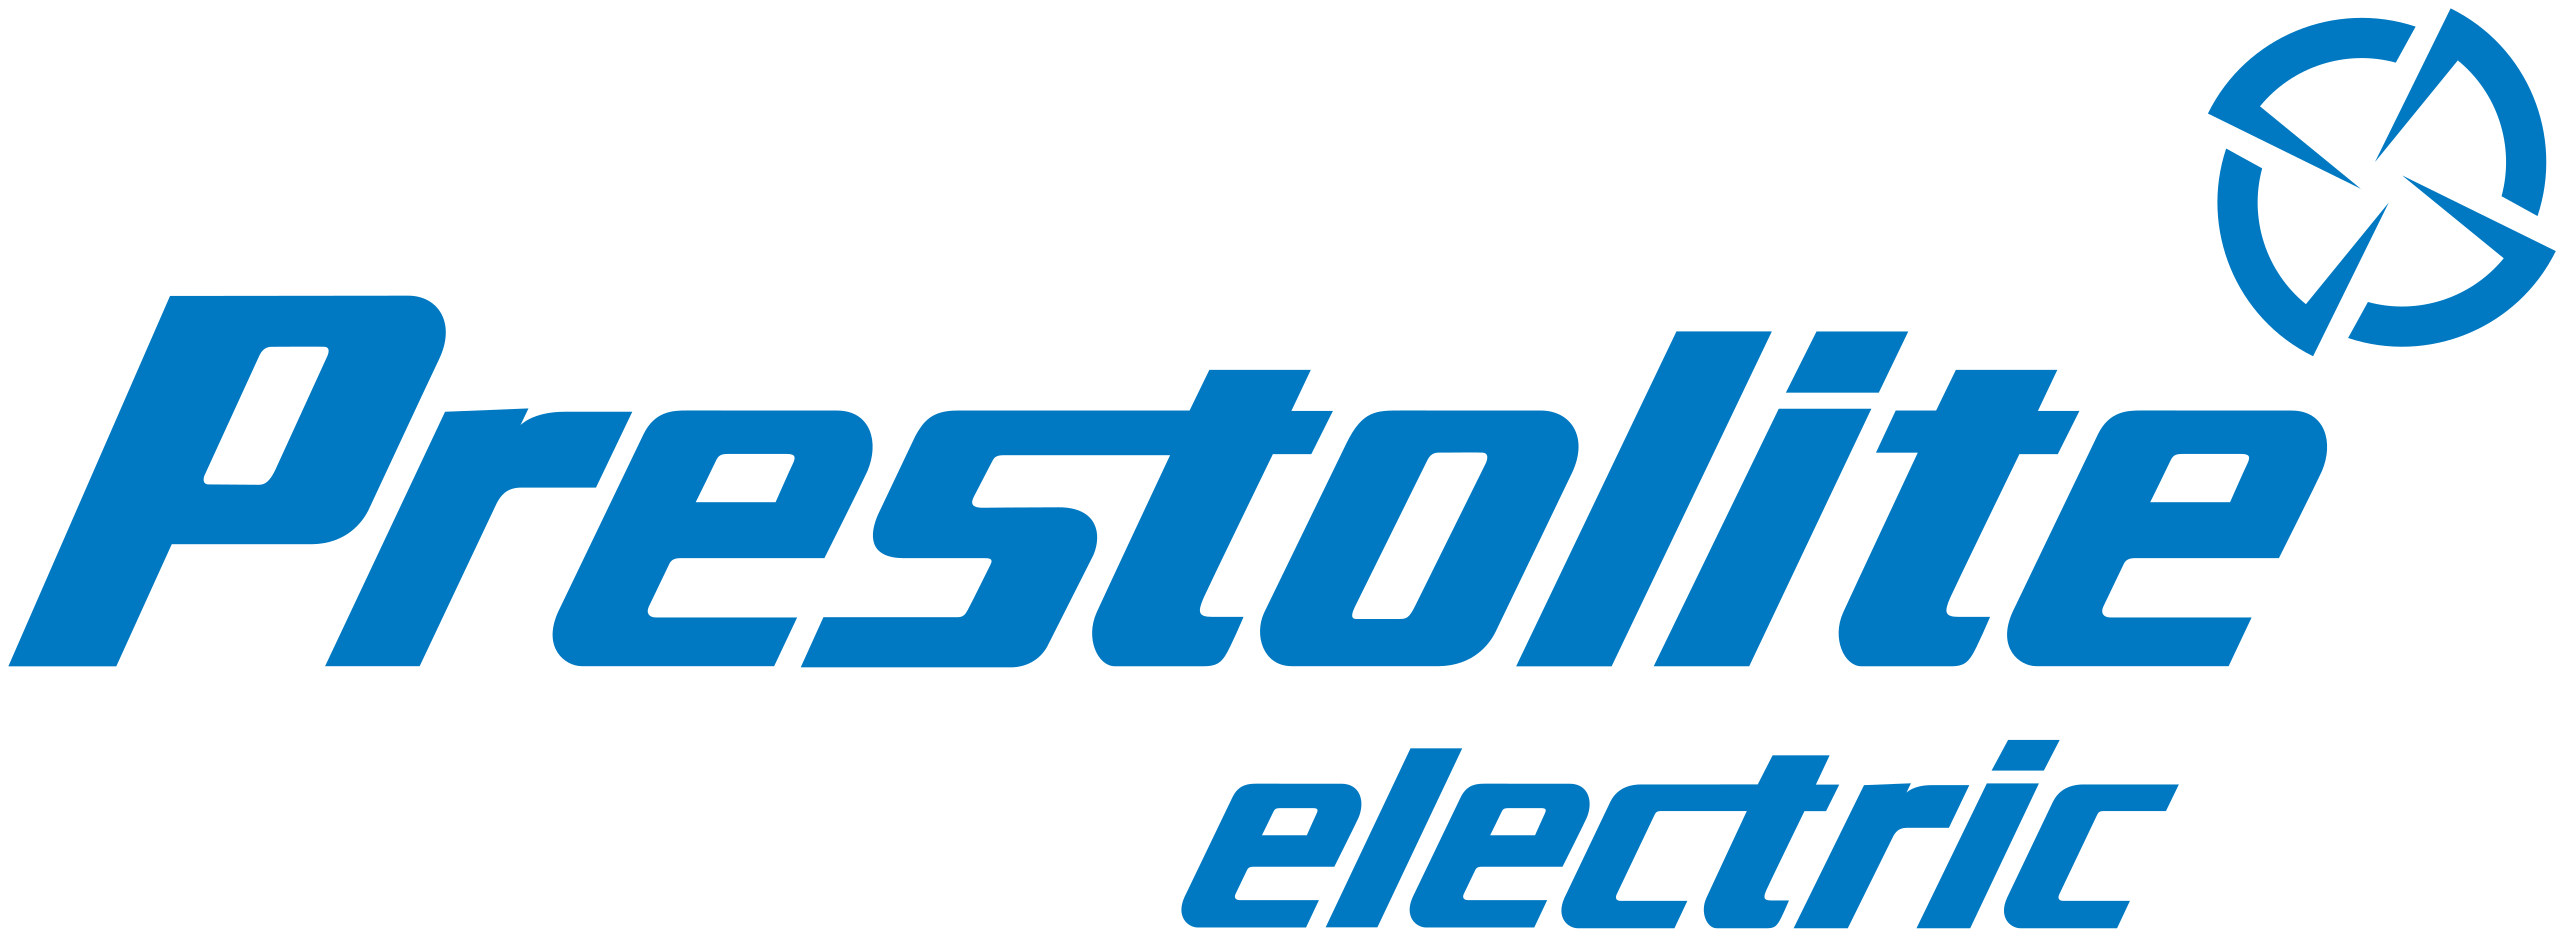 2560px-Prestolite_Electric_logo.svg